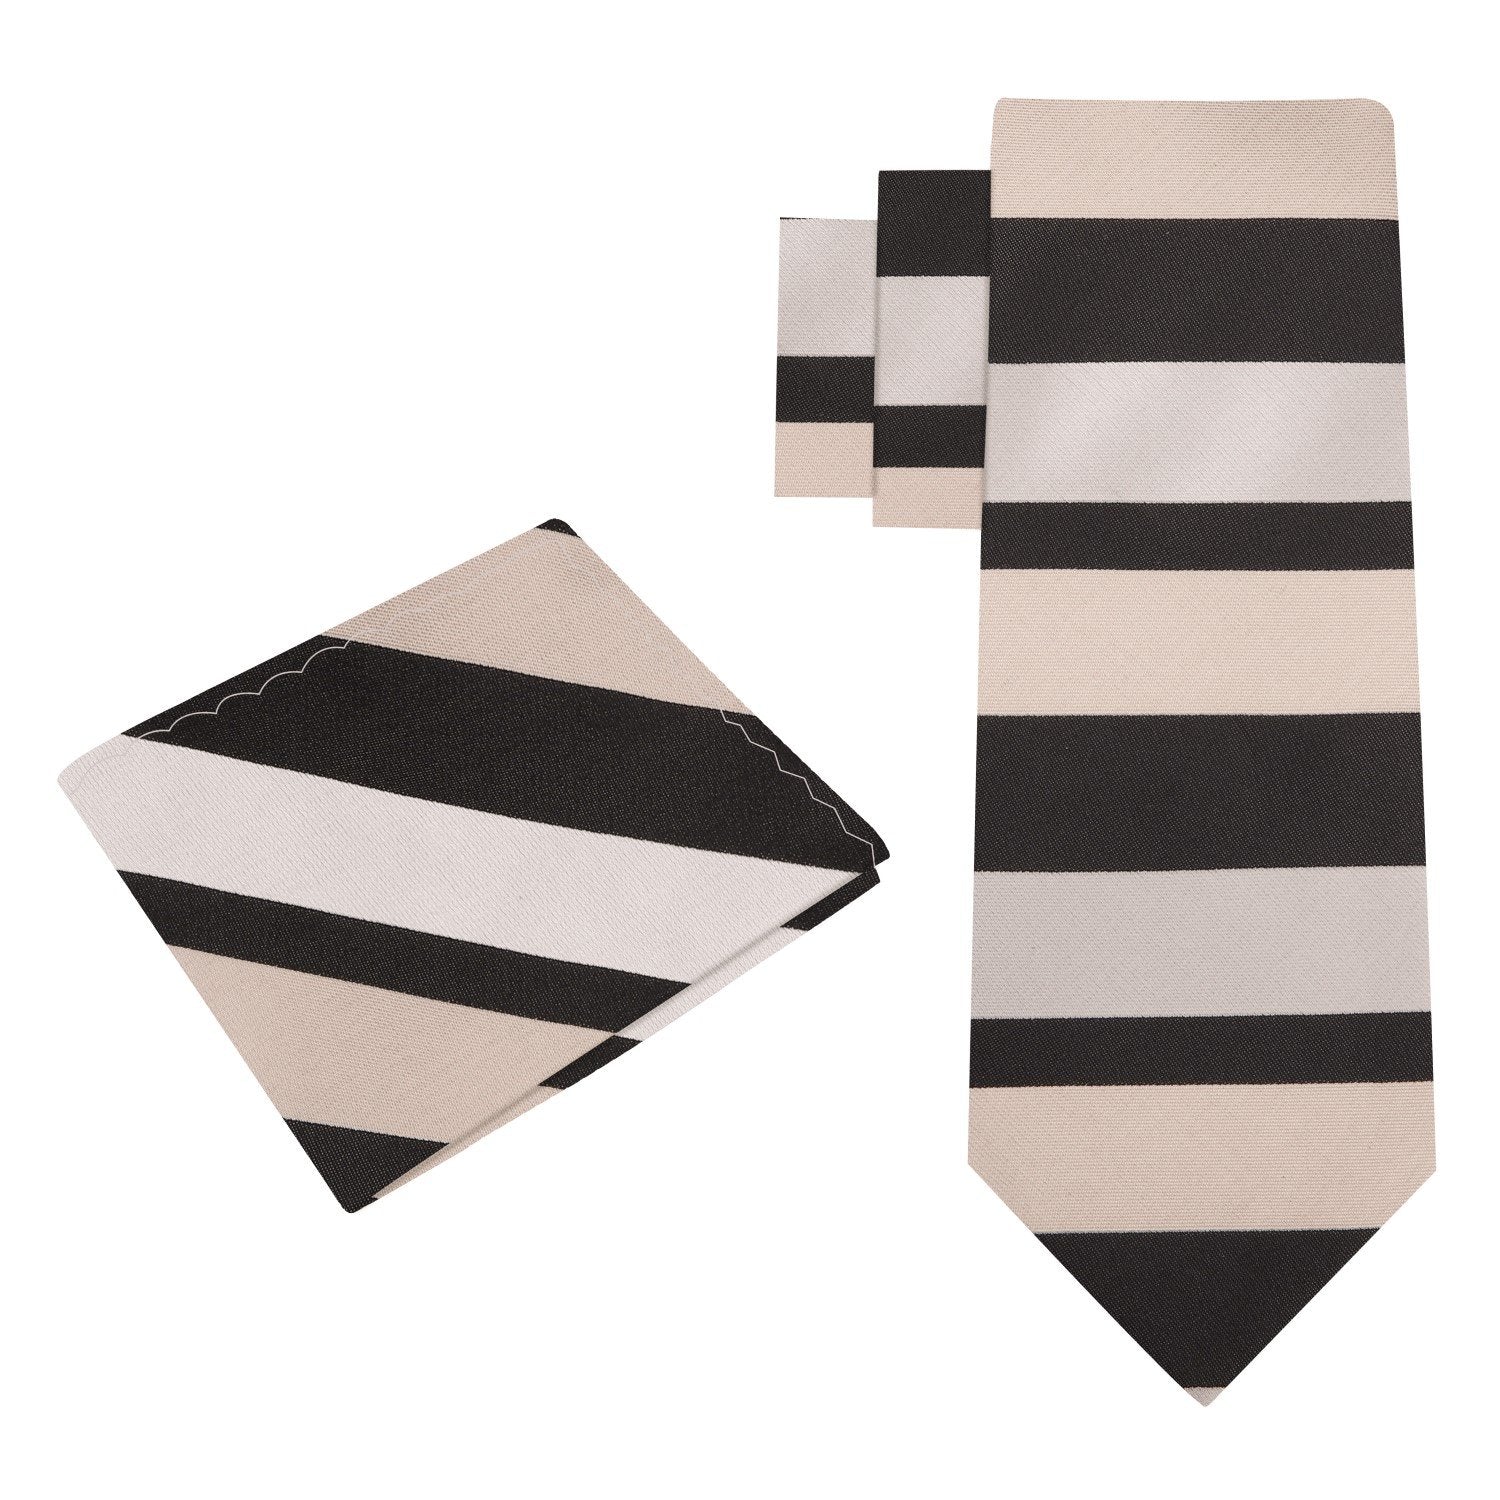 Alt View: Light Brown, Dark Brown Stripe Tie and Pocket Square